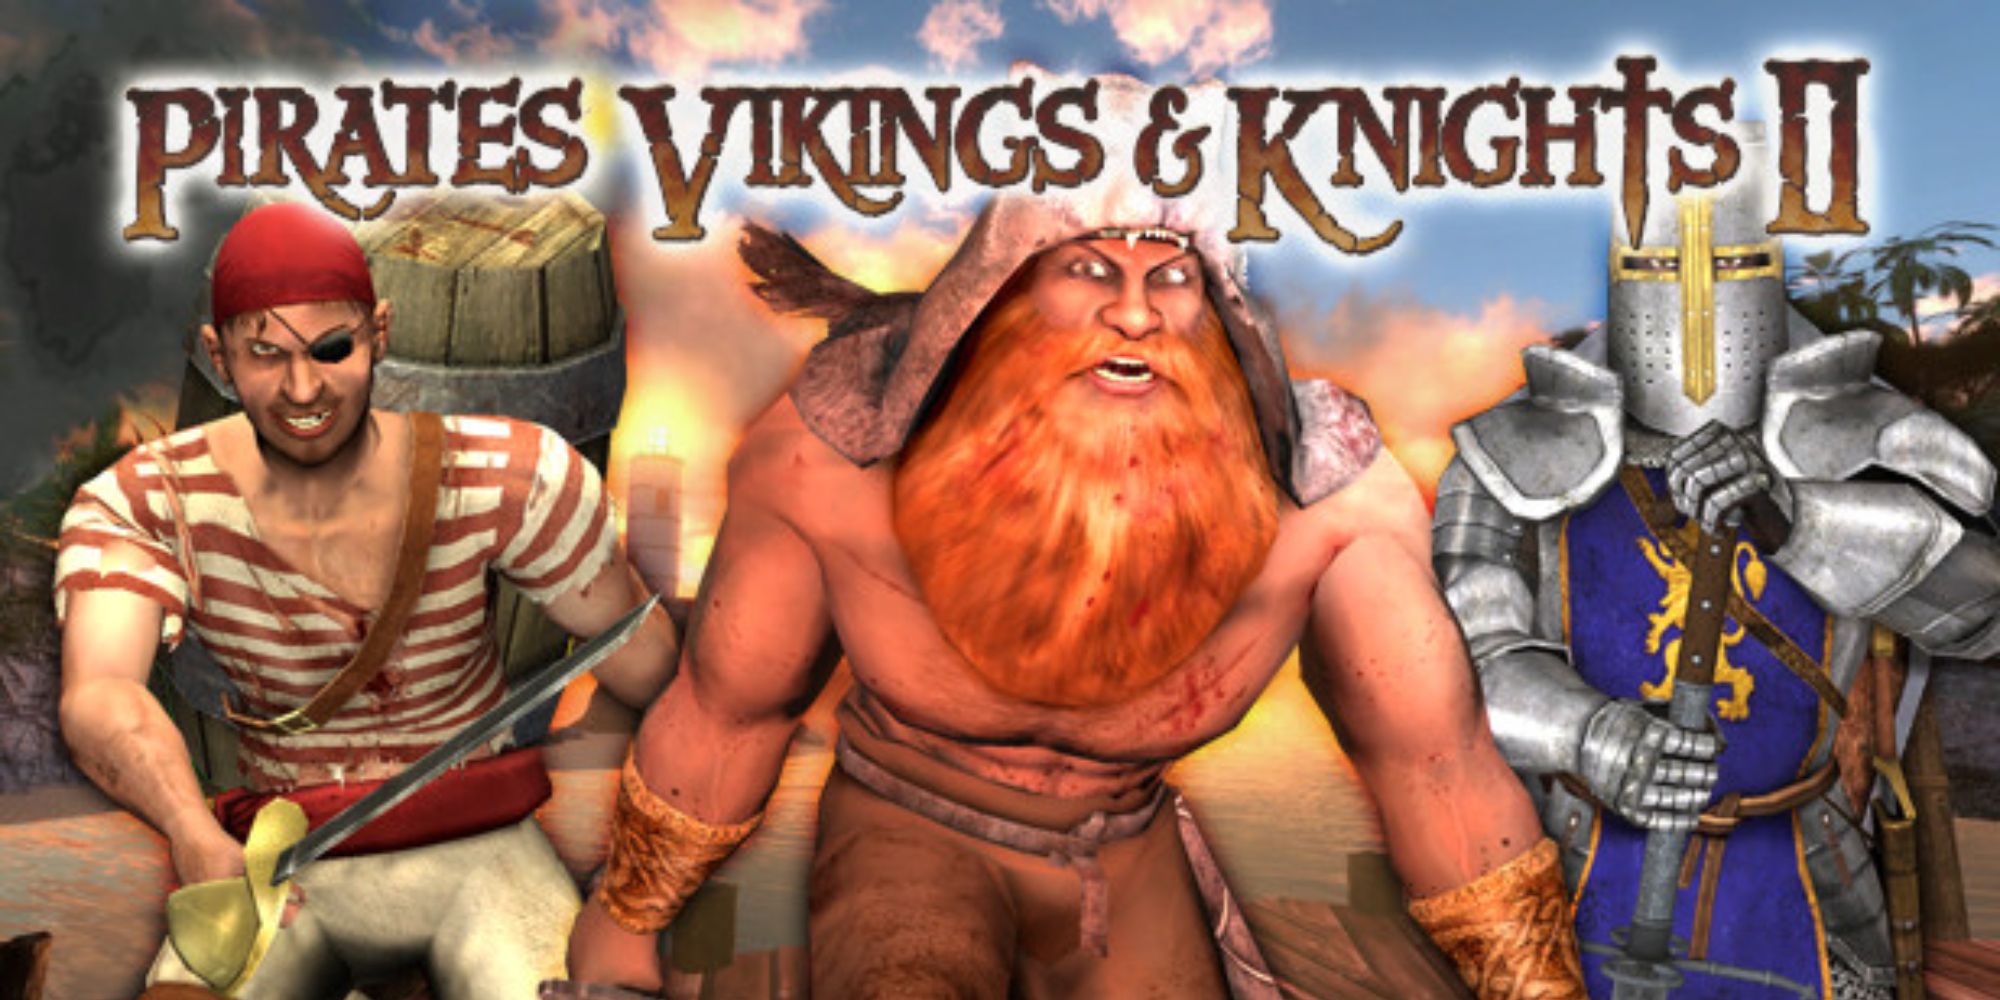 Pirate Viking Knights